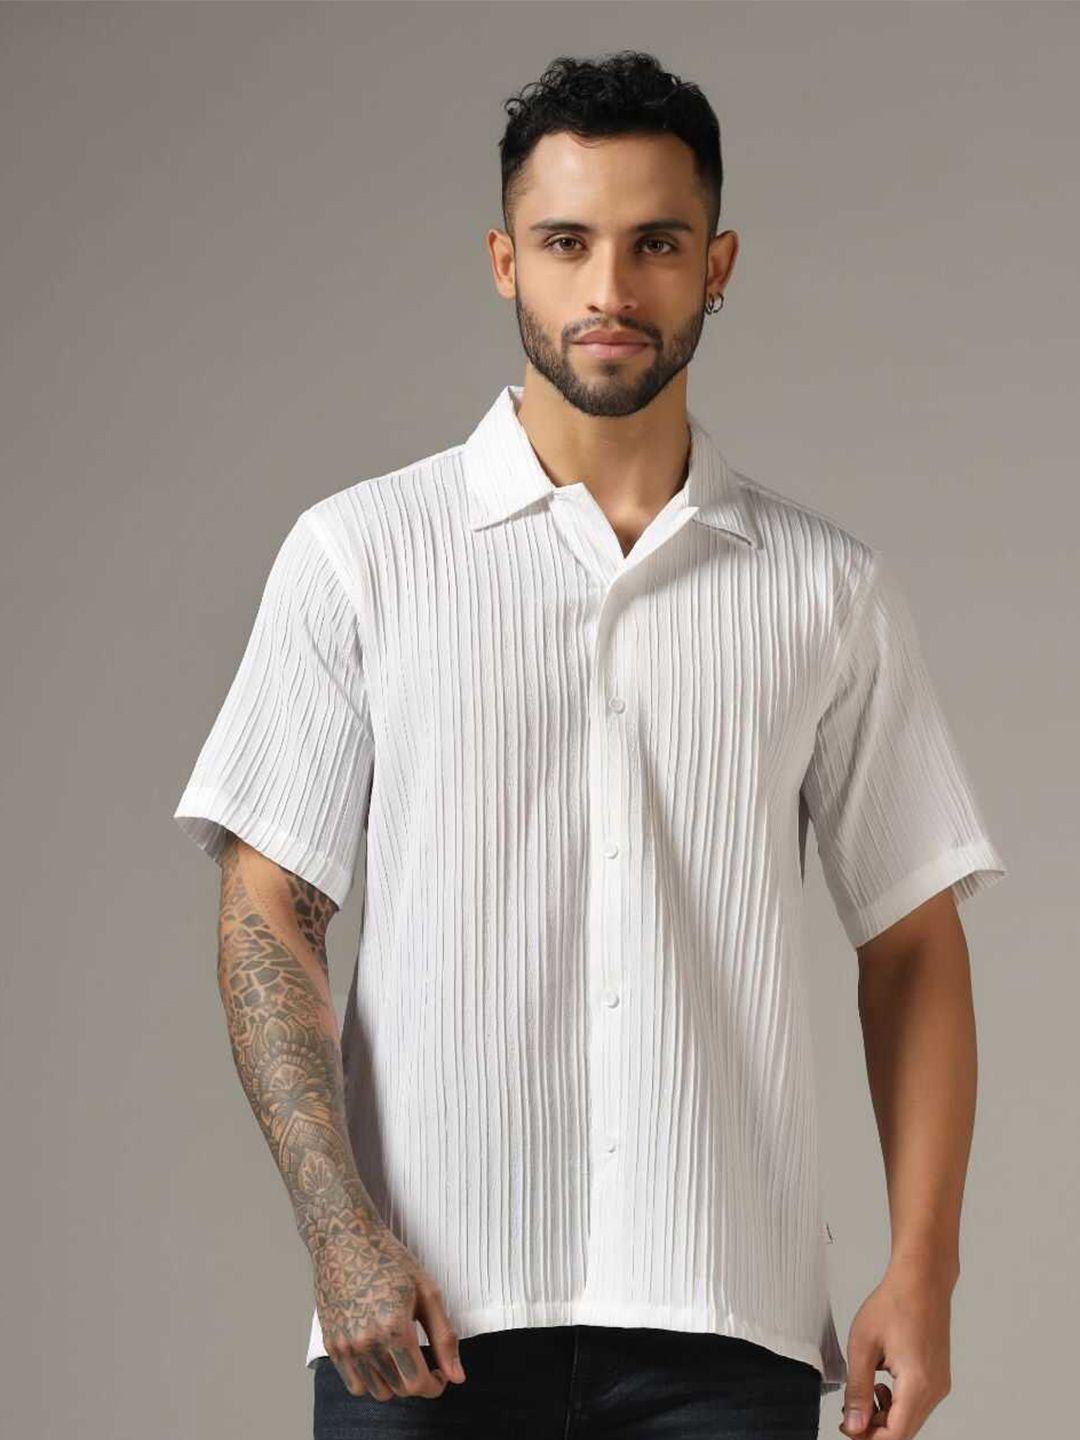 greciilooks men classic opaque striped casual shirt